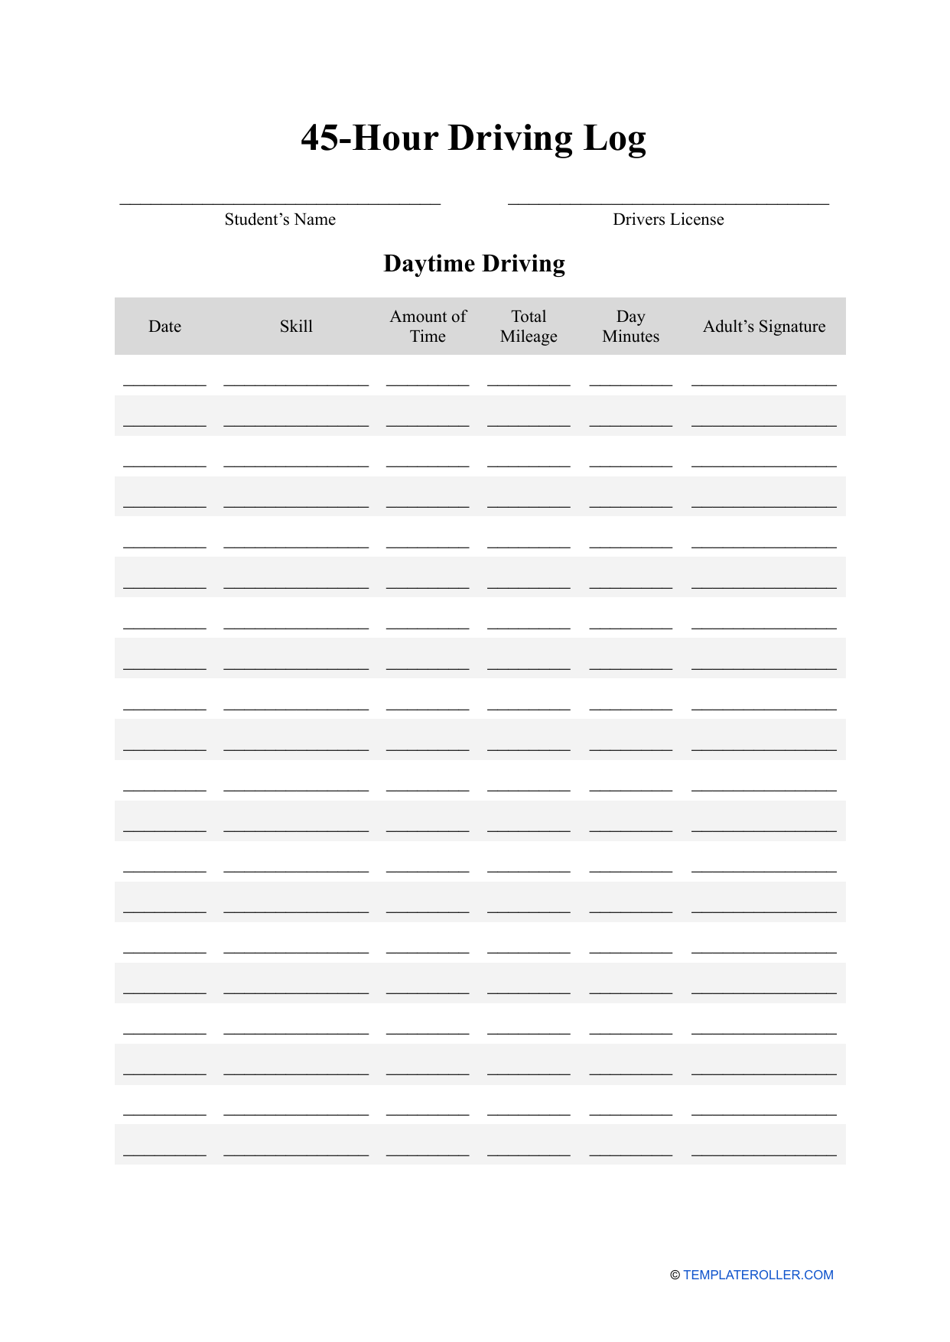 45-hour-driving-log-sheet-template-download-printable-pdf-templateroller